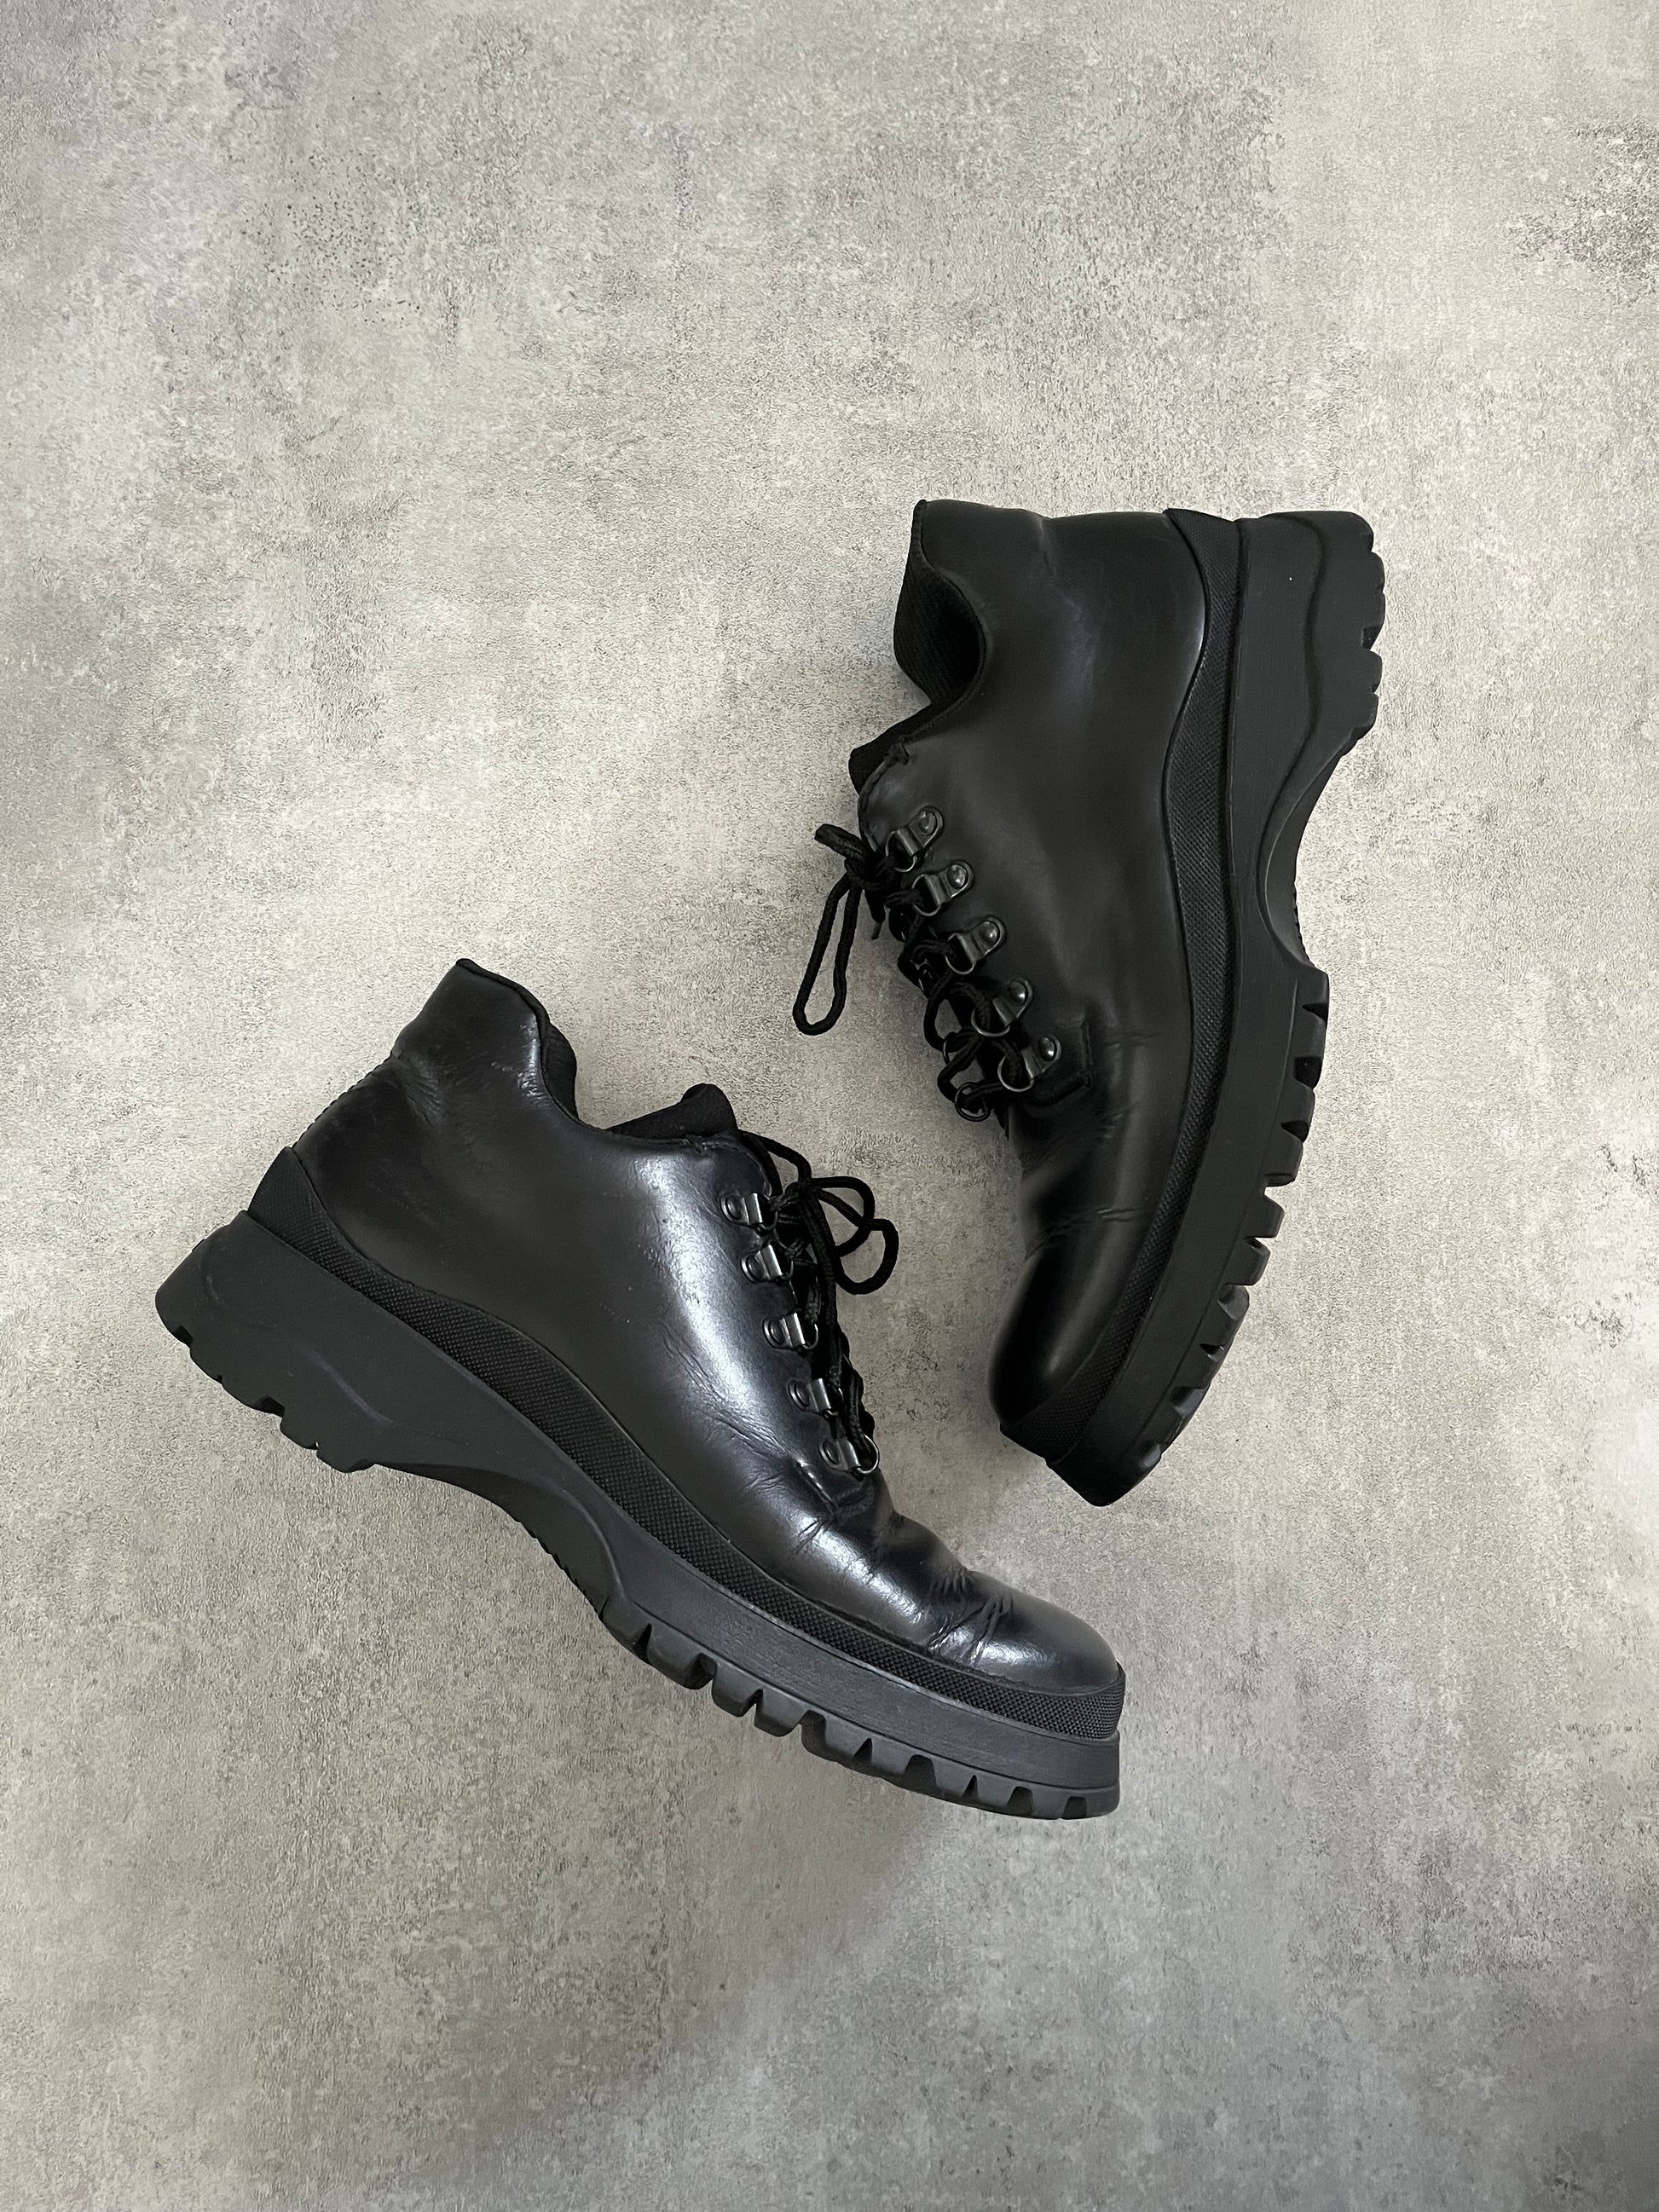 AW1999 Prada Vibram Leather Boots (41) - 4